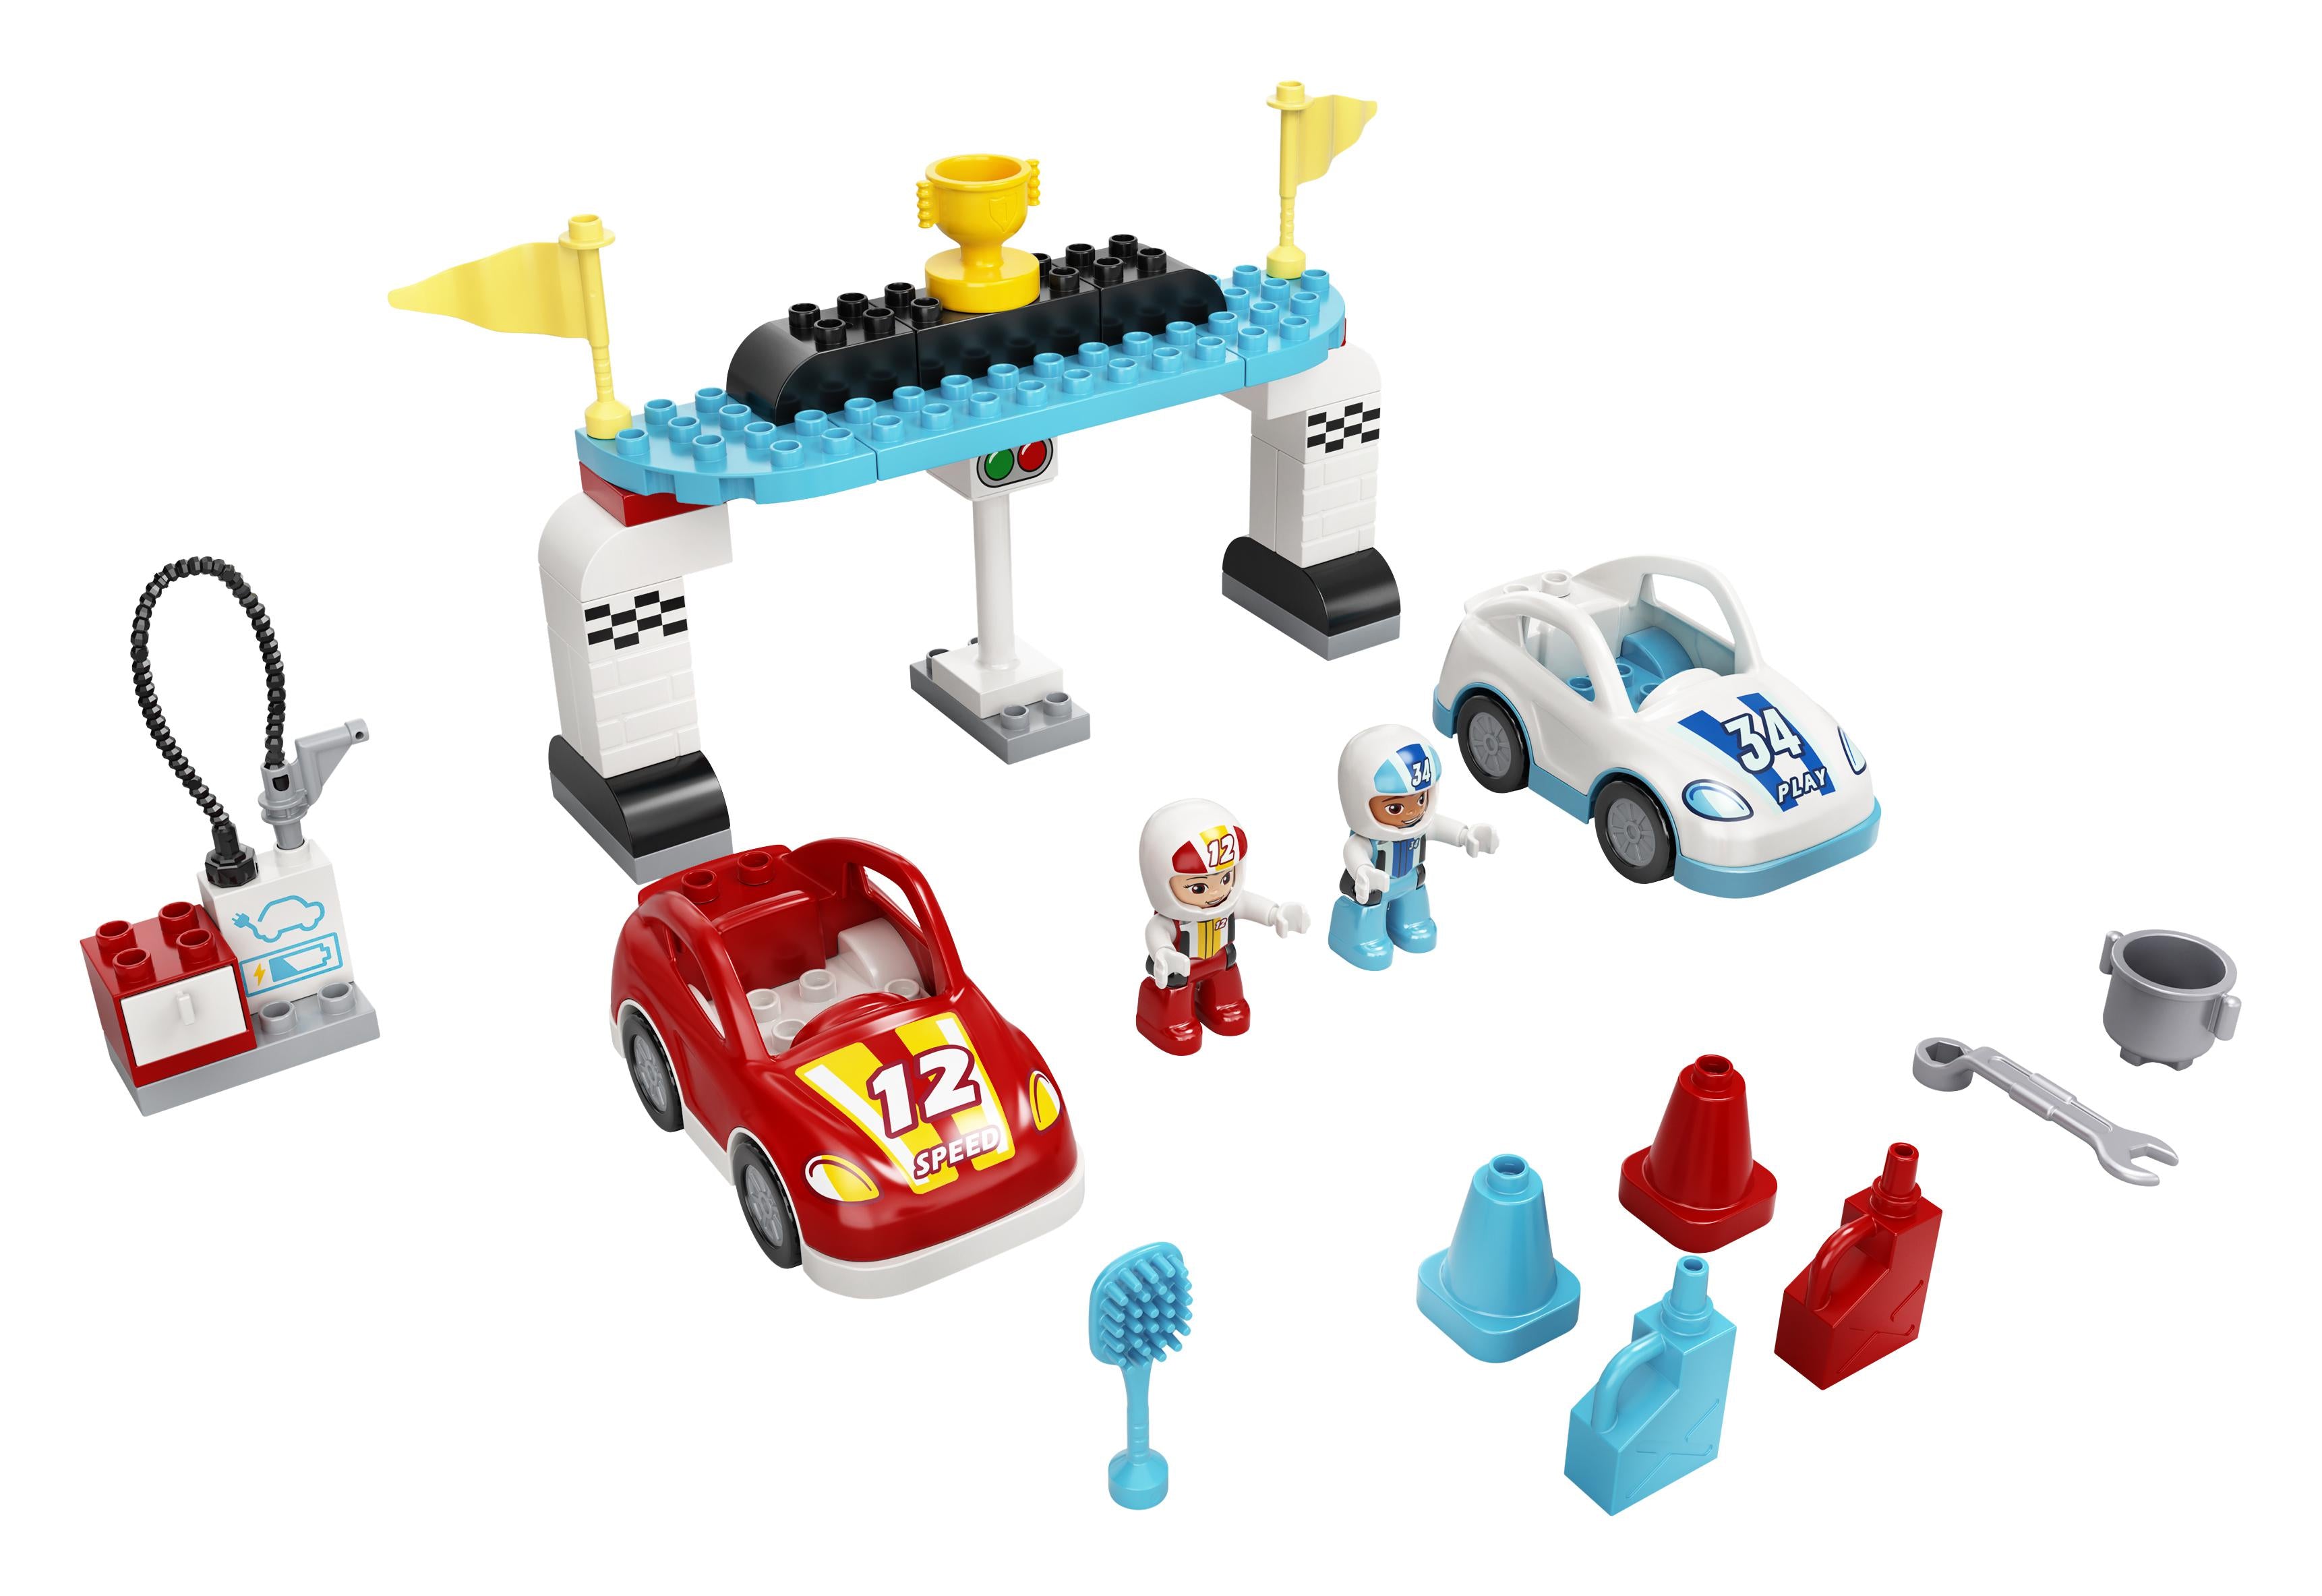 LEGO Duplo Race Cars 10947